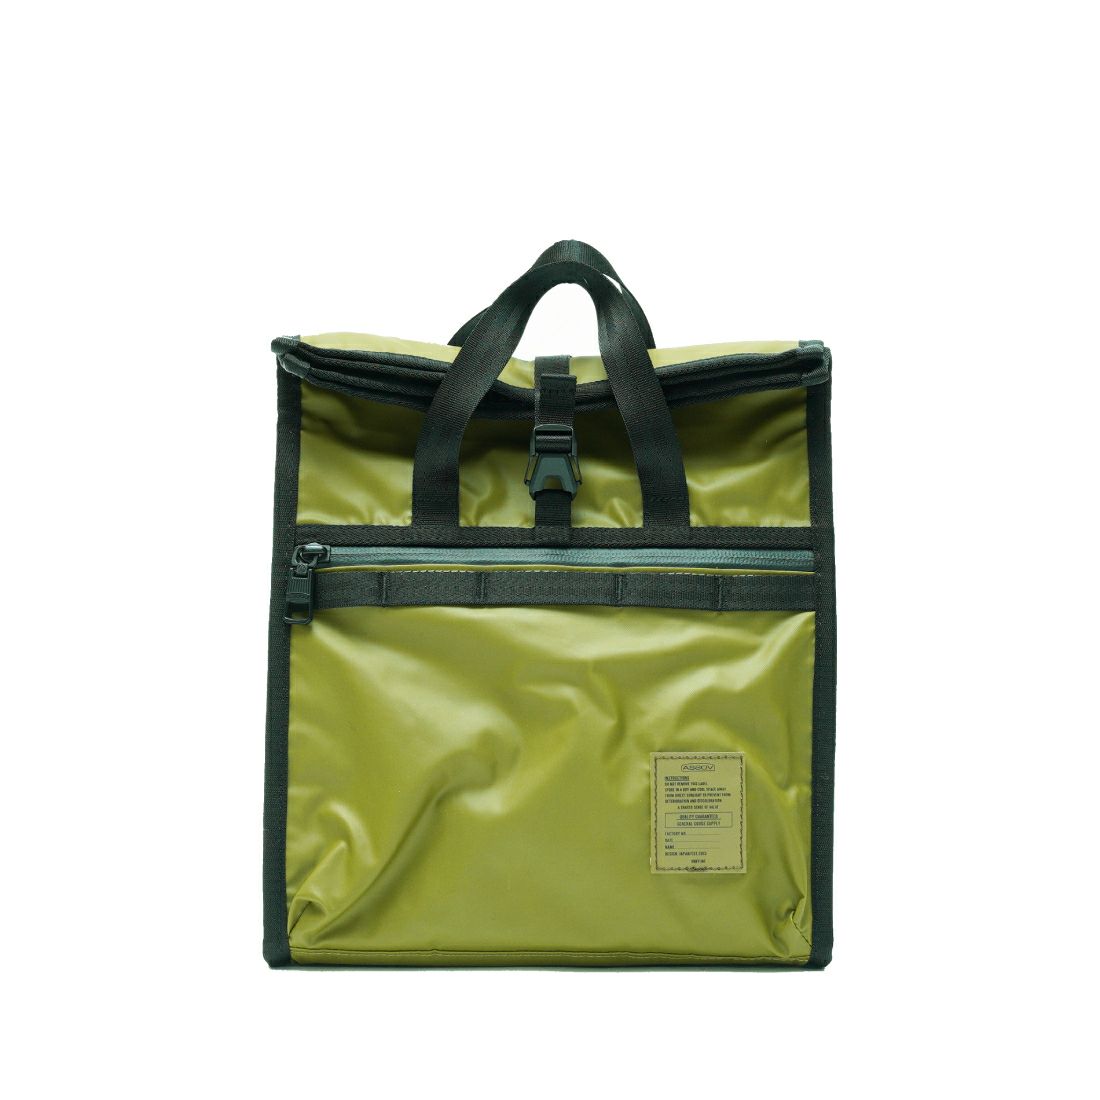 AS2OV – NYLON POLYCARBONATE LUNCH BAG / 機能收納保溫野餐袋 25